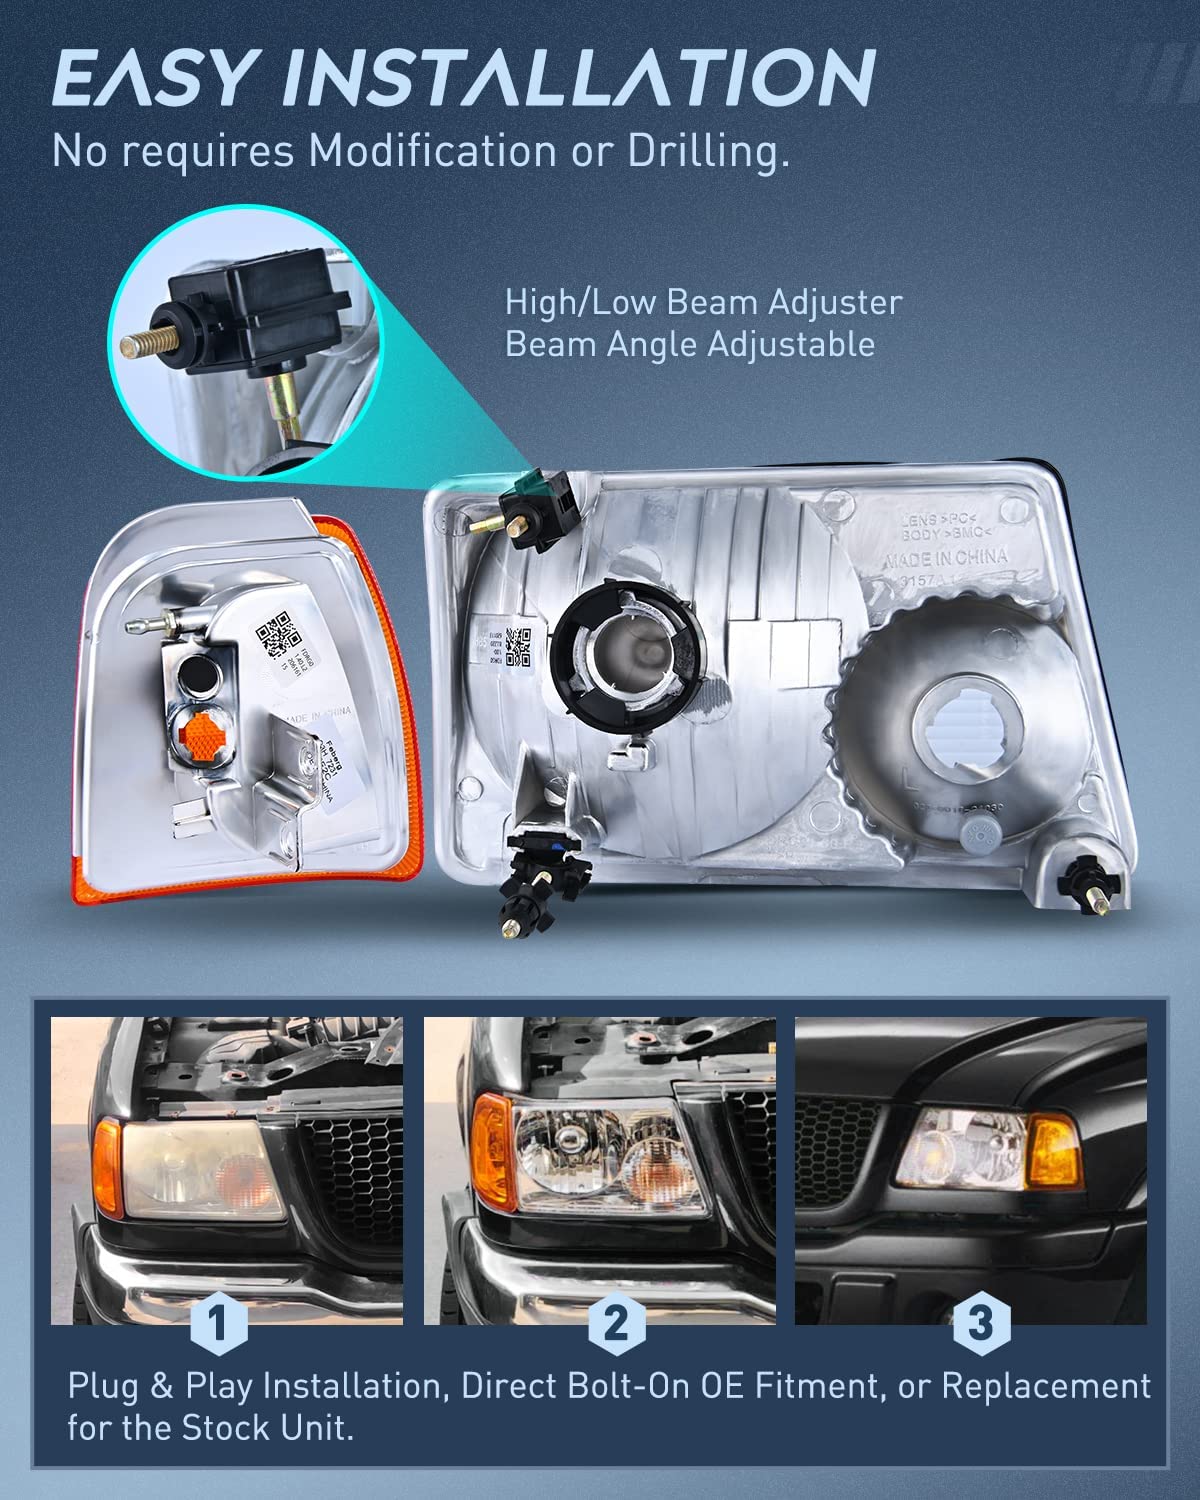 2001-2011 Ford Ranger Headlight Assembly Chrome Case Amber Reflector Nilight